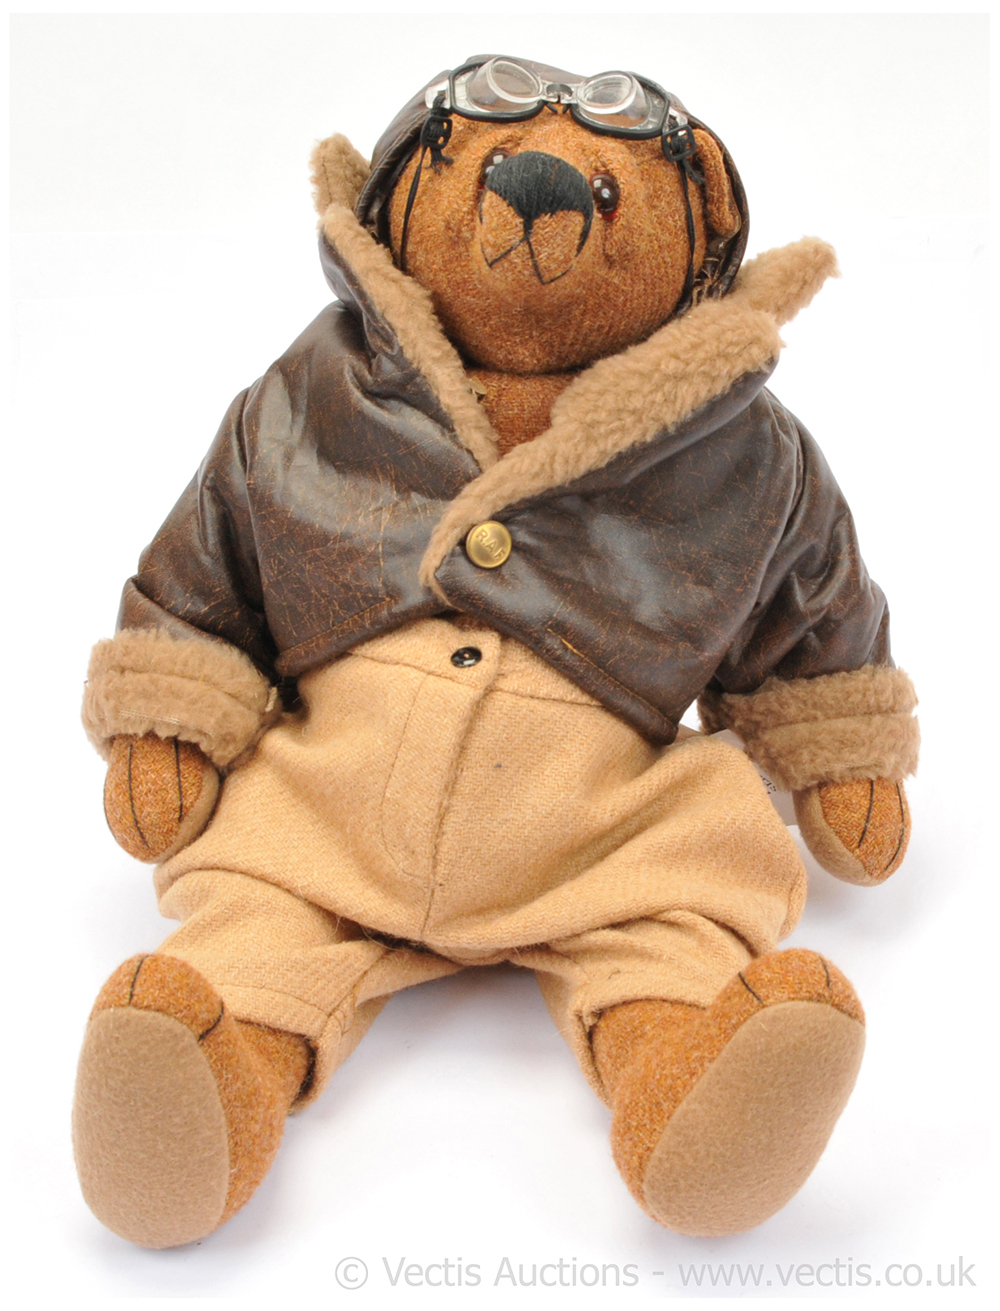 The Hand Crafted Harris Tweed Teddy Bears Binky